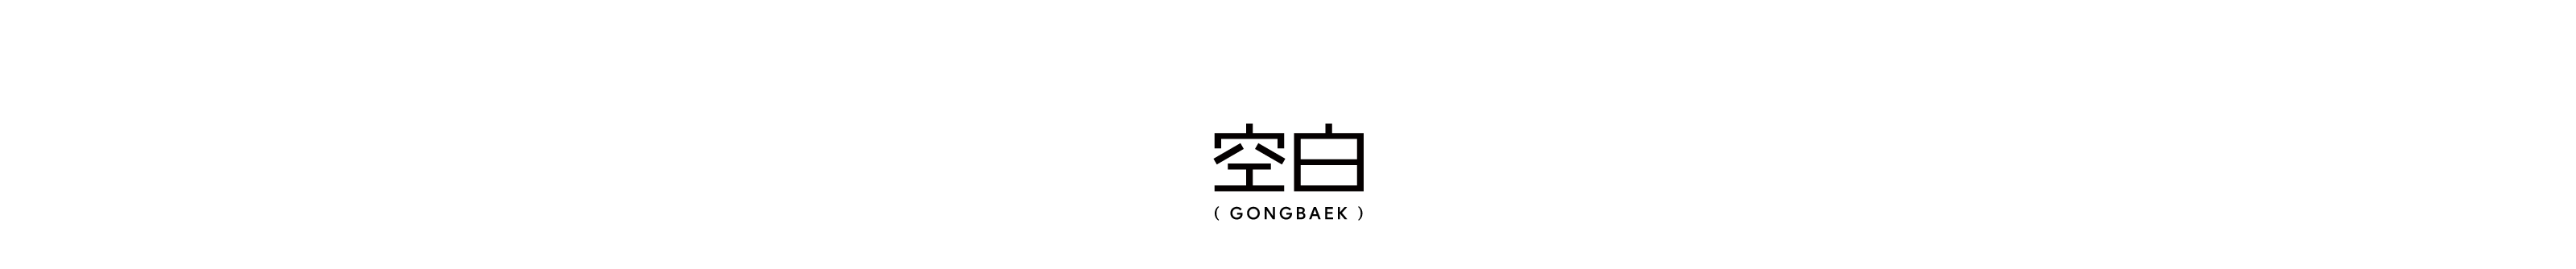 0100 ( GONGBAEK )'s profile banner